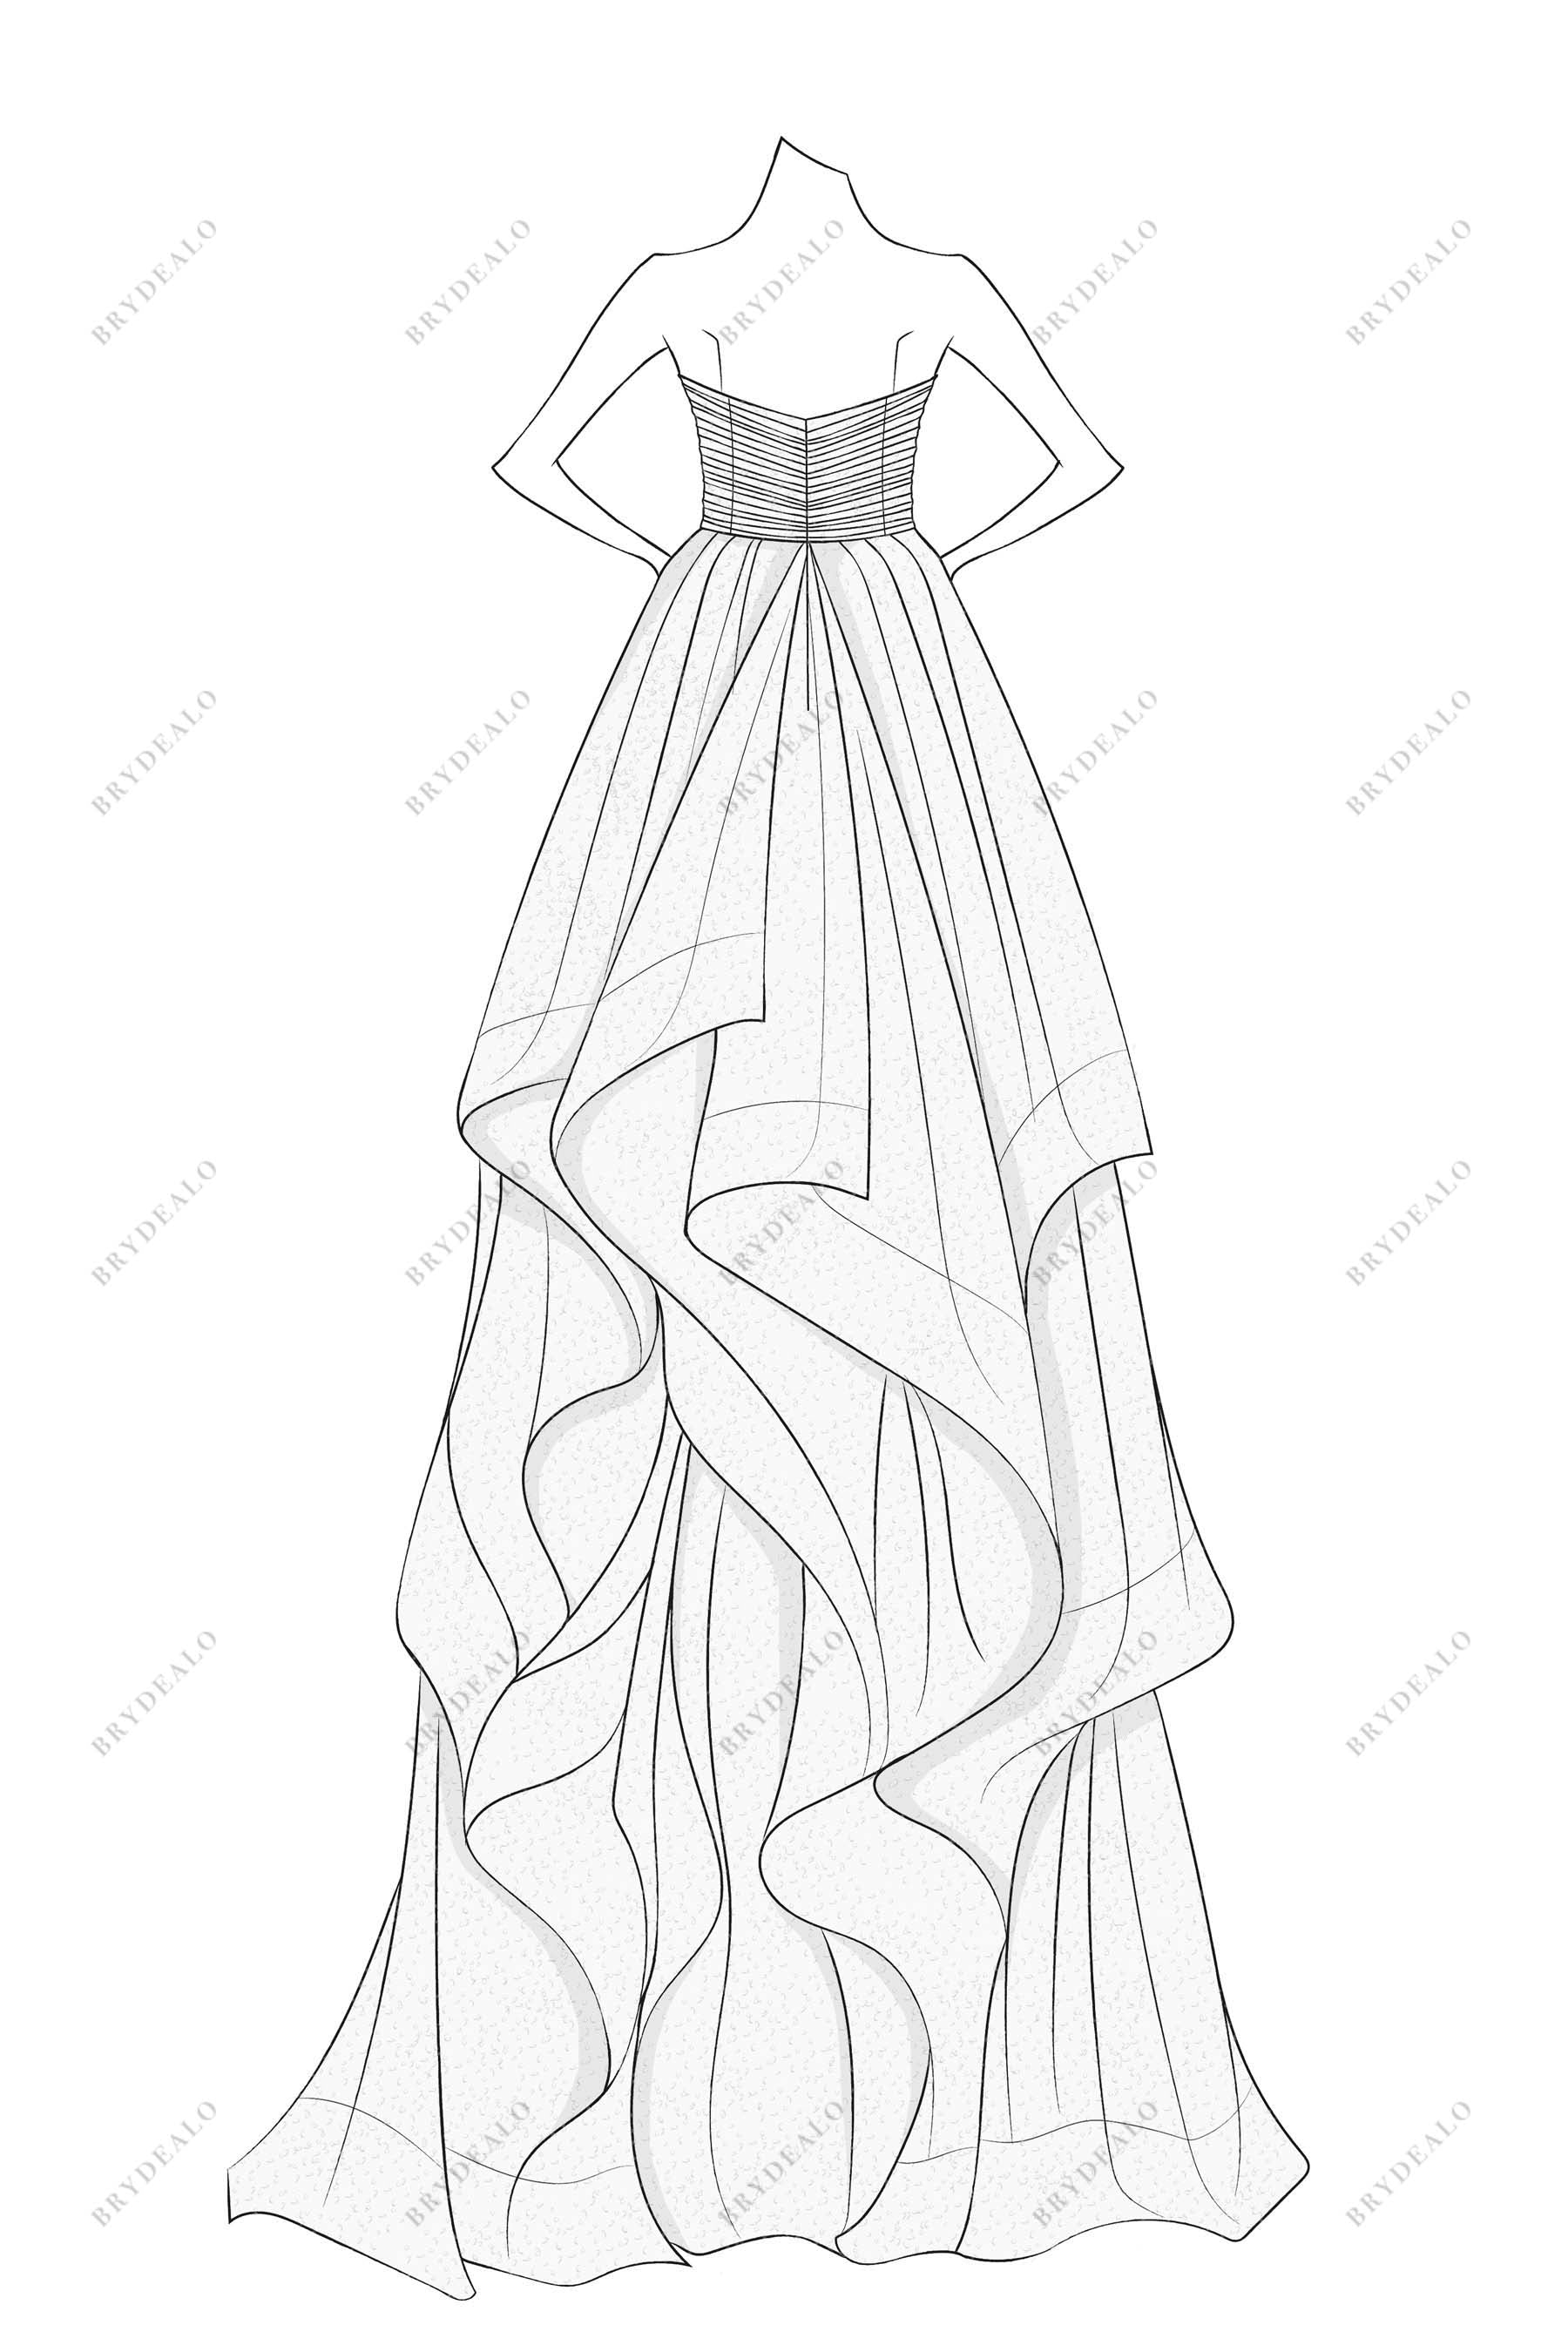 how to draw a dress sketch